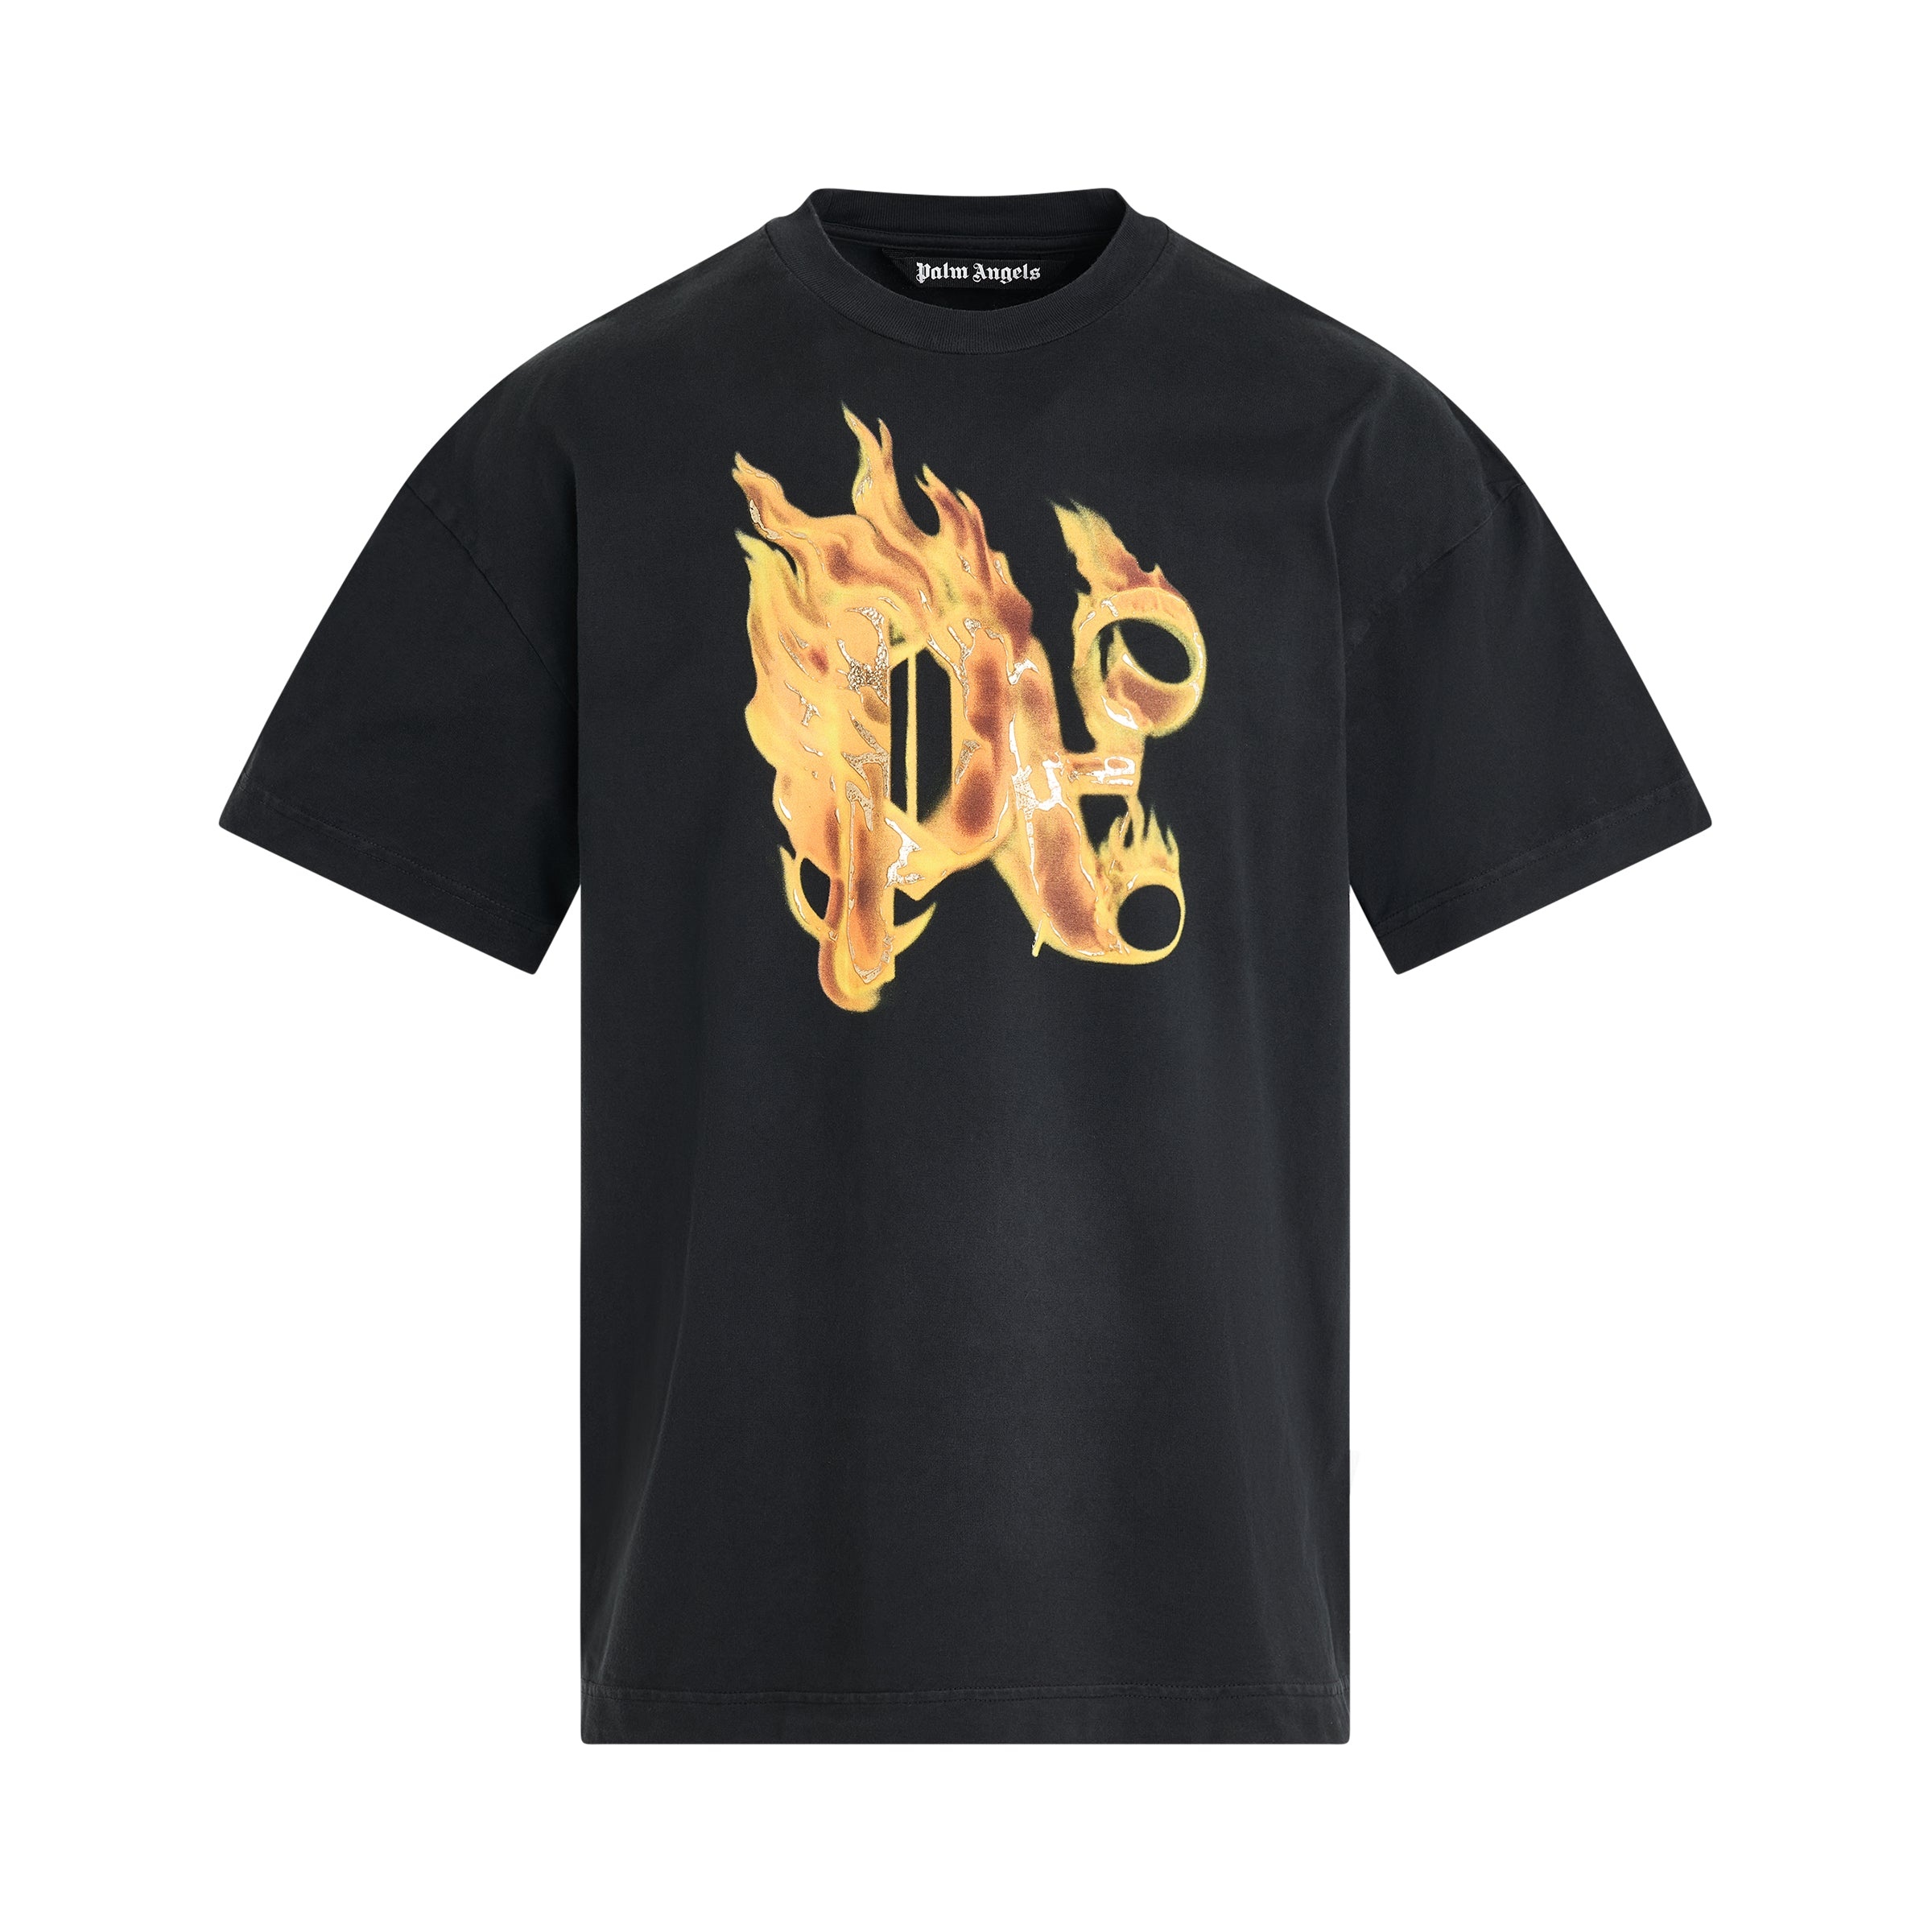 Burning Monogram T-Shirt in Black/Gold - 1